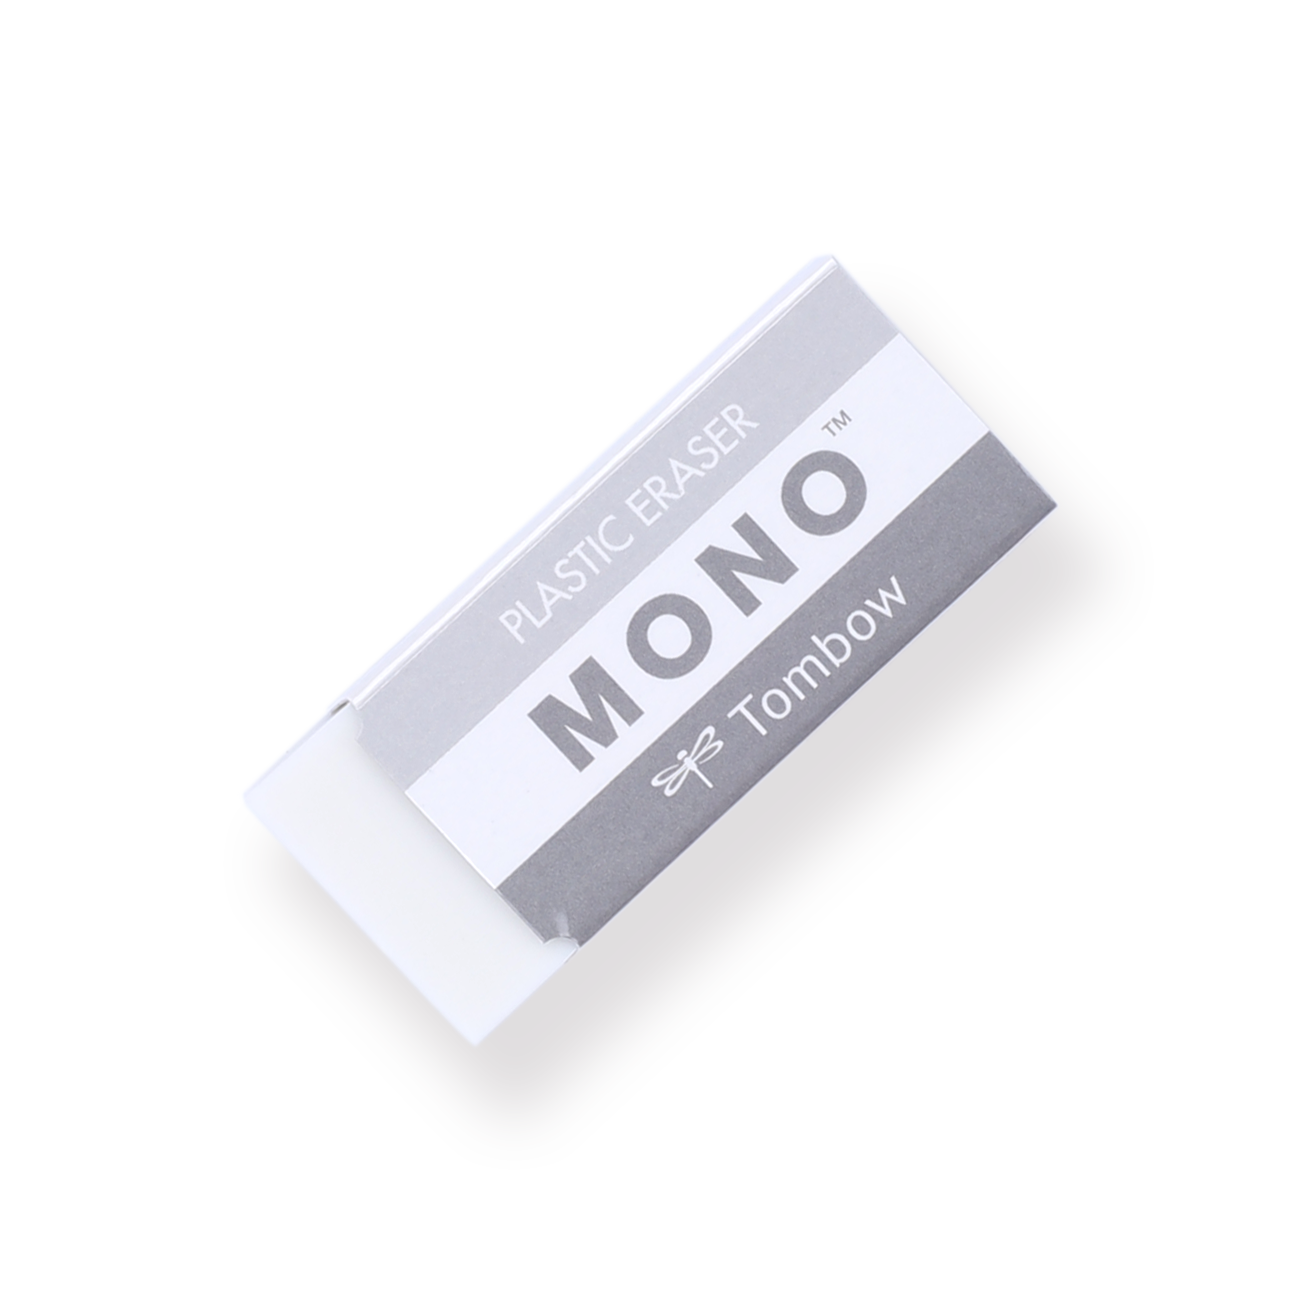 Tombow MONO x Sanrio Limited Edition Eraser - Kuromi - Stationery Pal